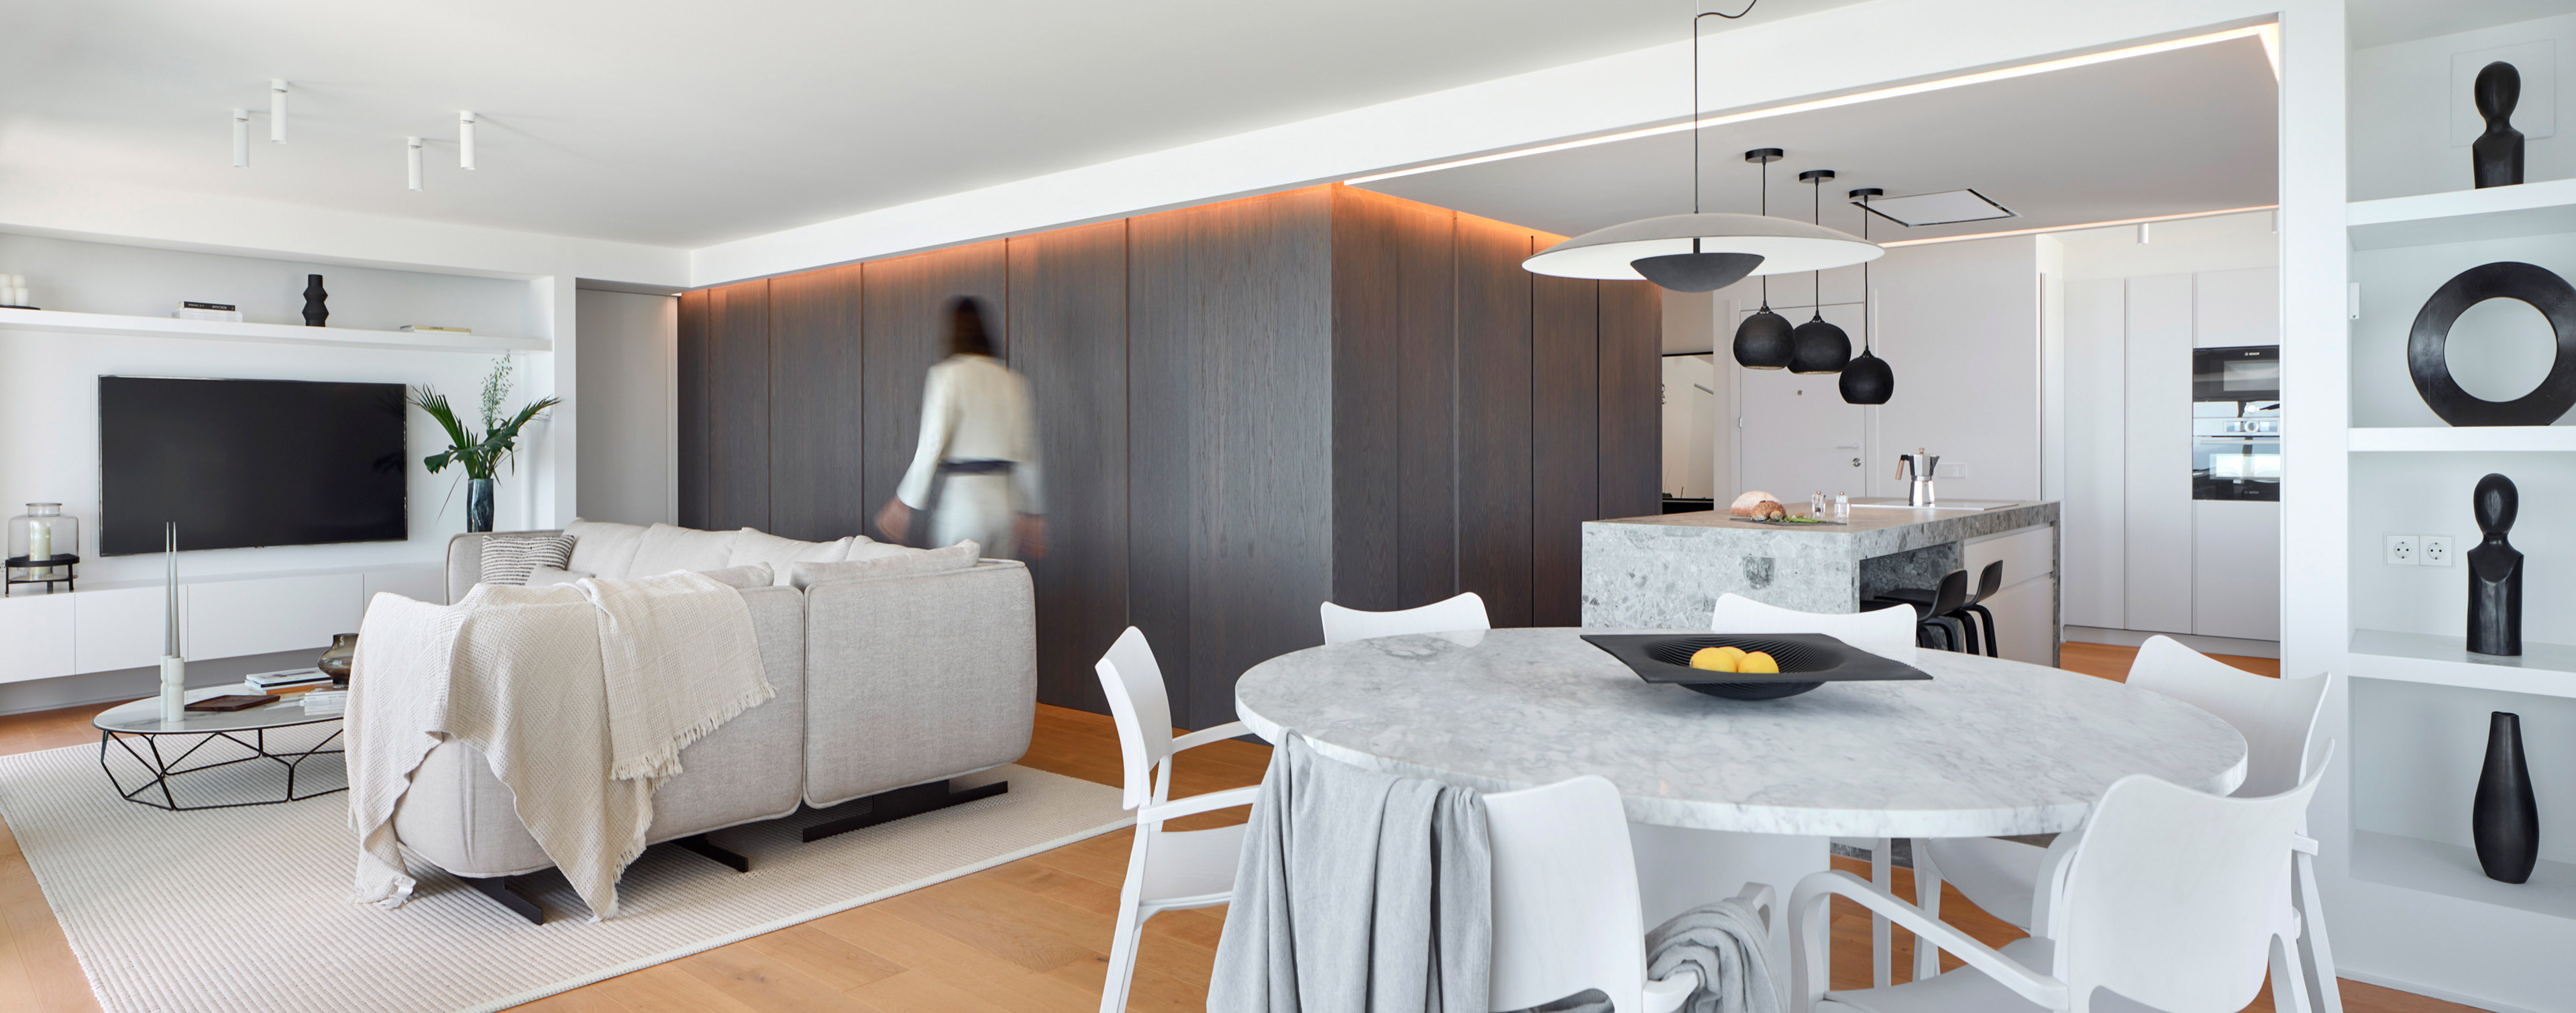 luv studio luxury architects sitges apartment IMG 01 - LUV Studio - Architecture et design - Barcelone